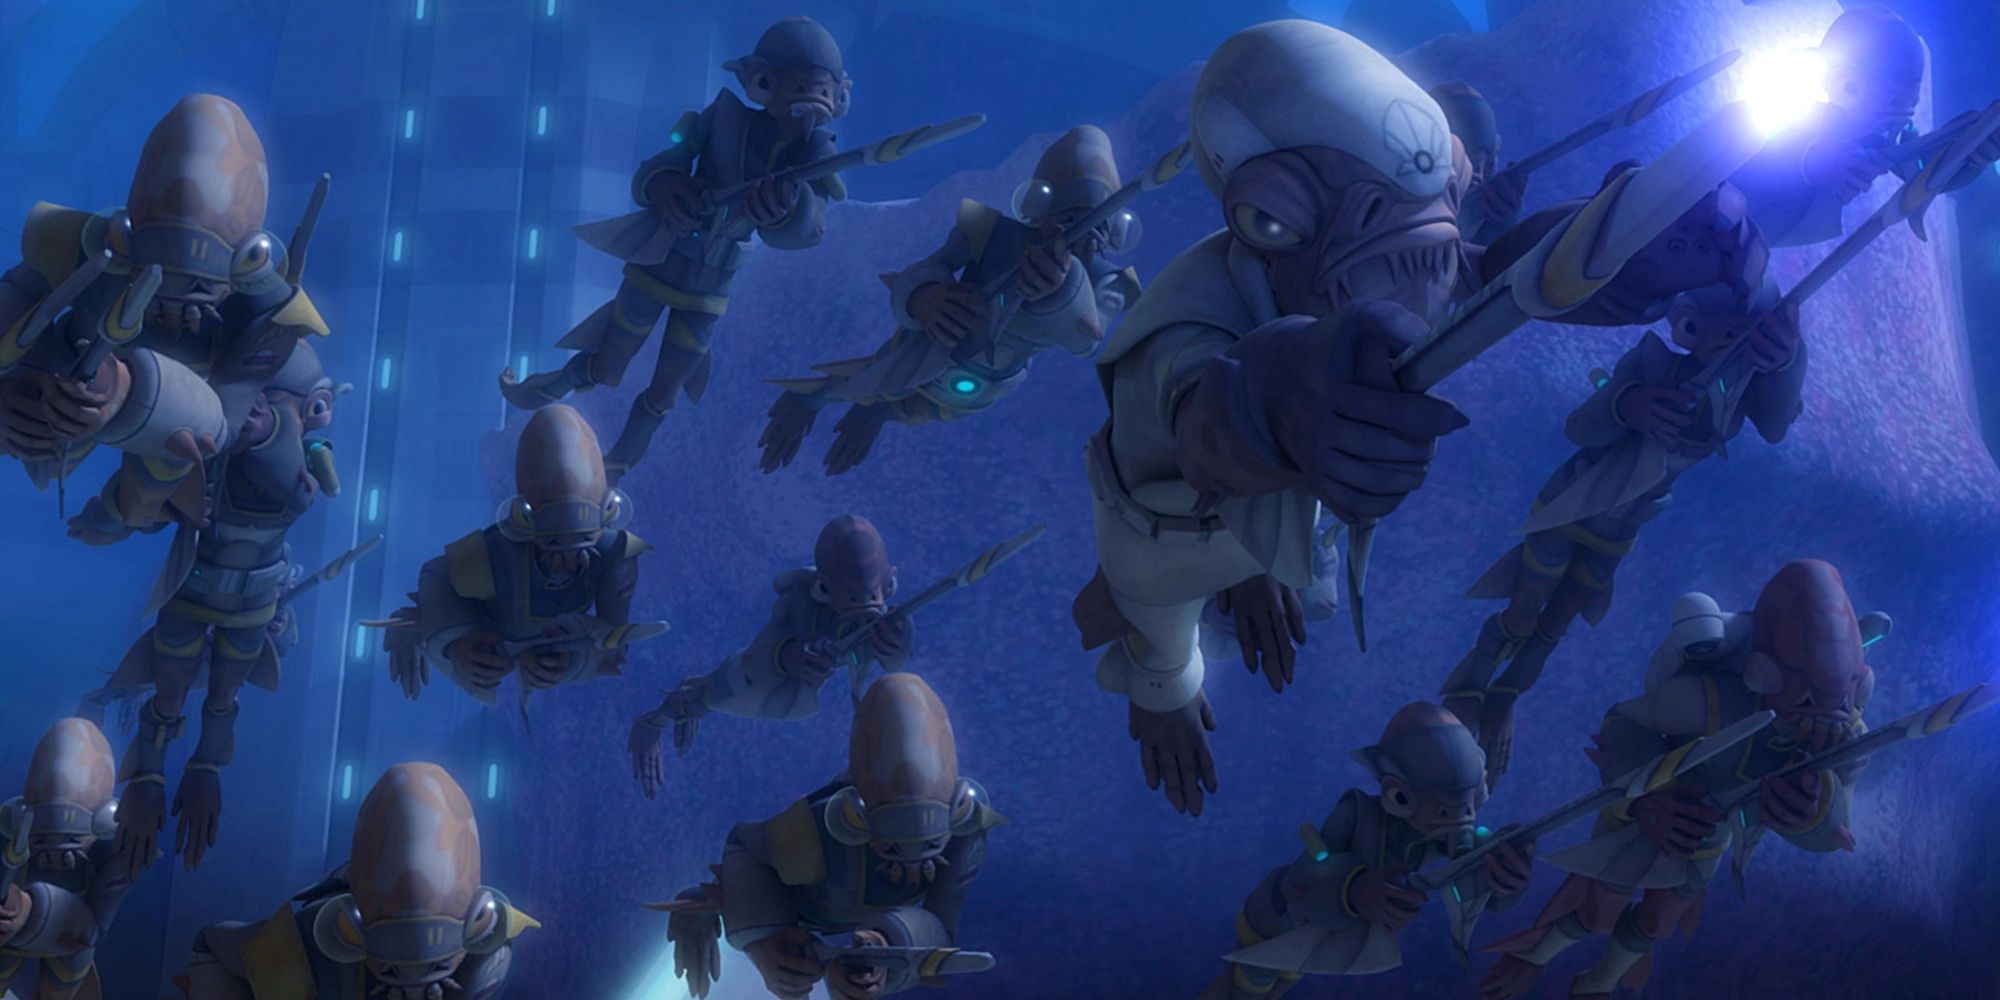 Mon Calamari Fighting In Water War Episode Of Star Wars: Clone Wars